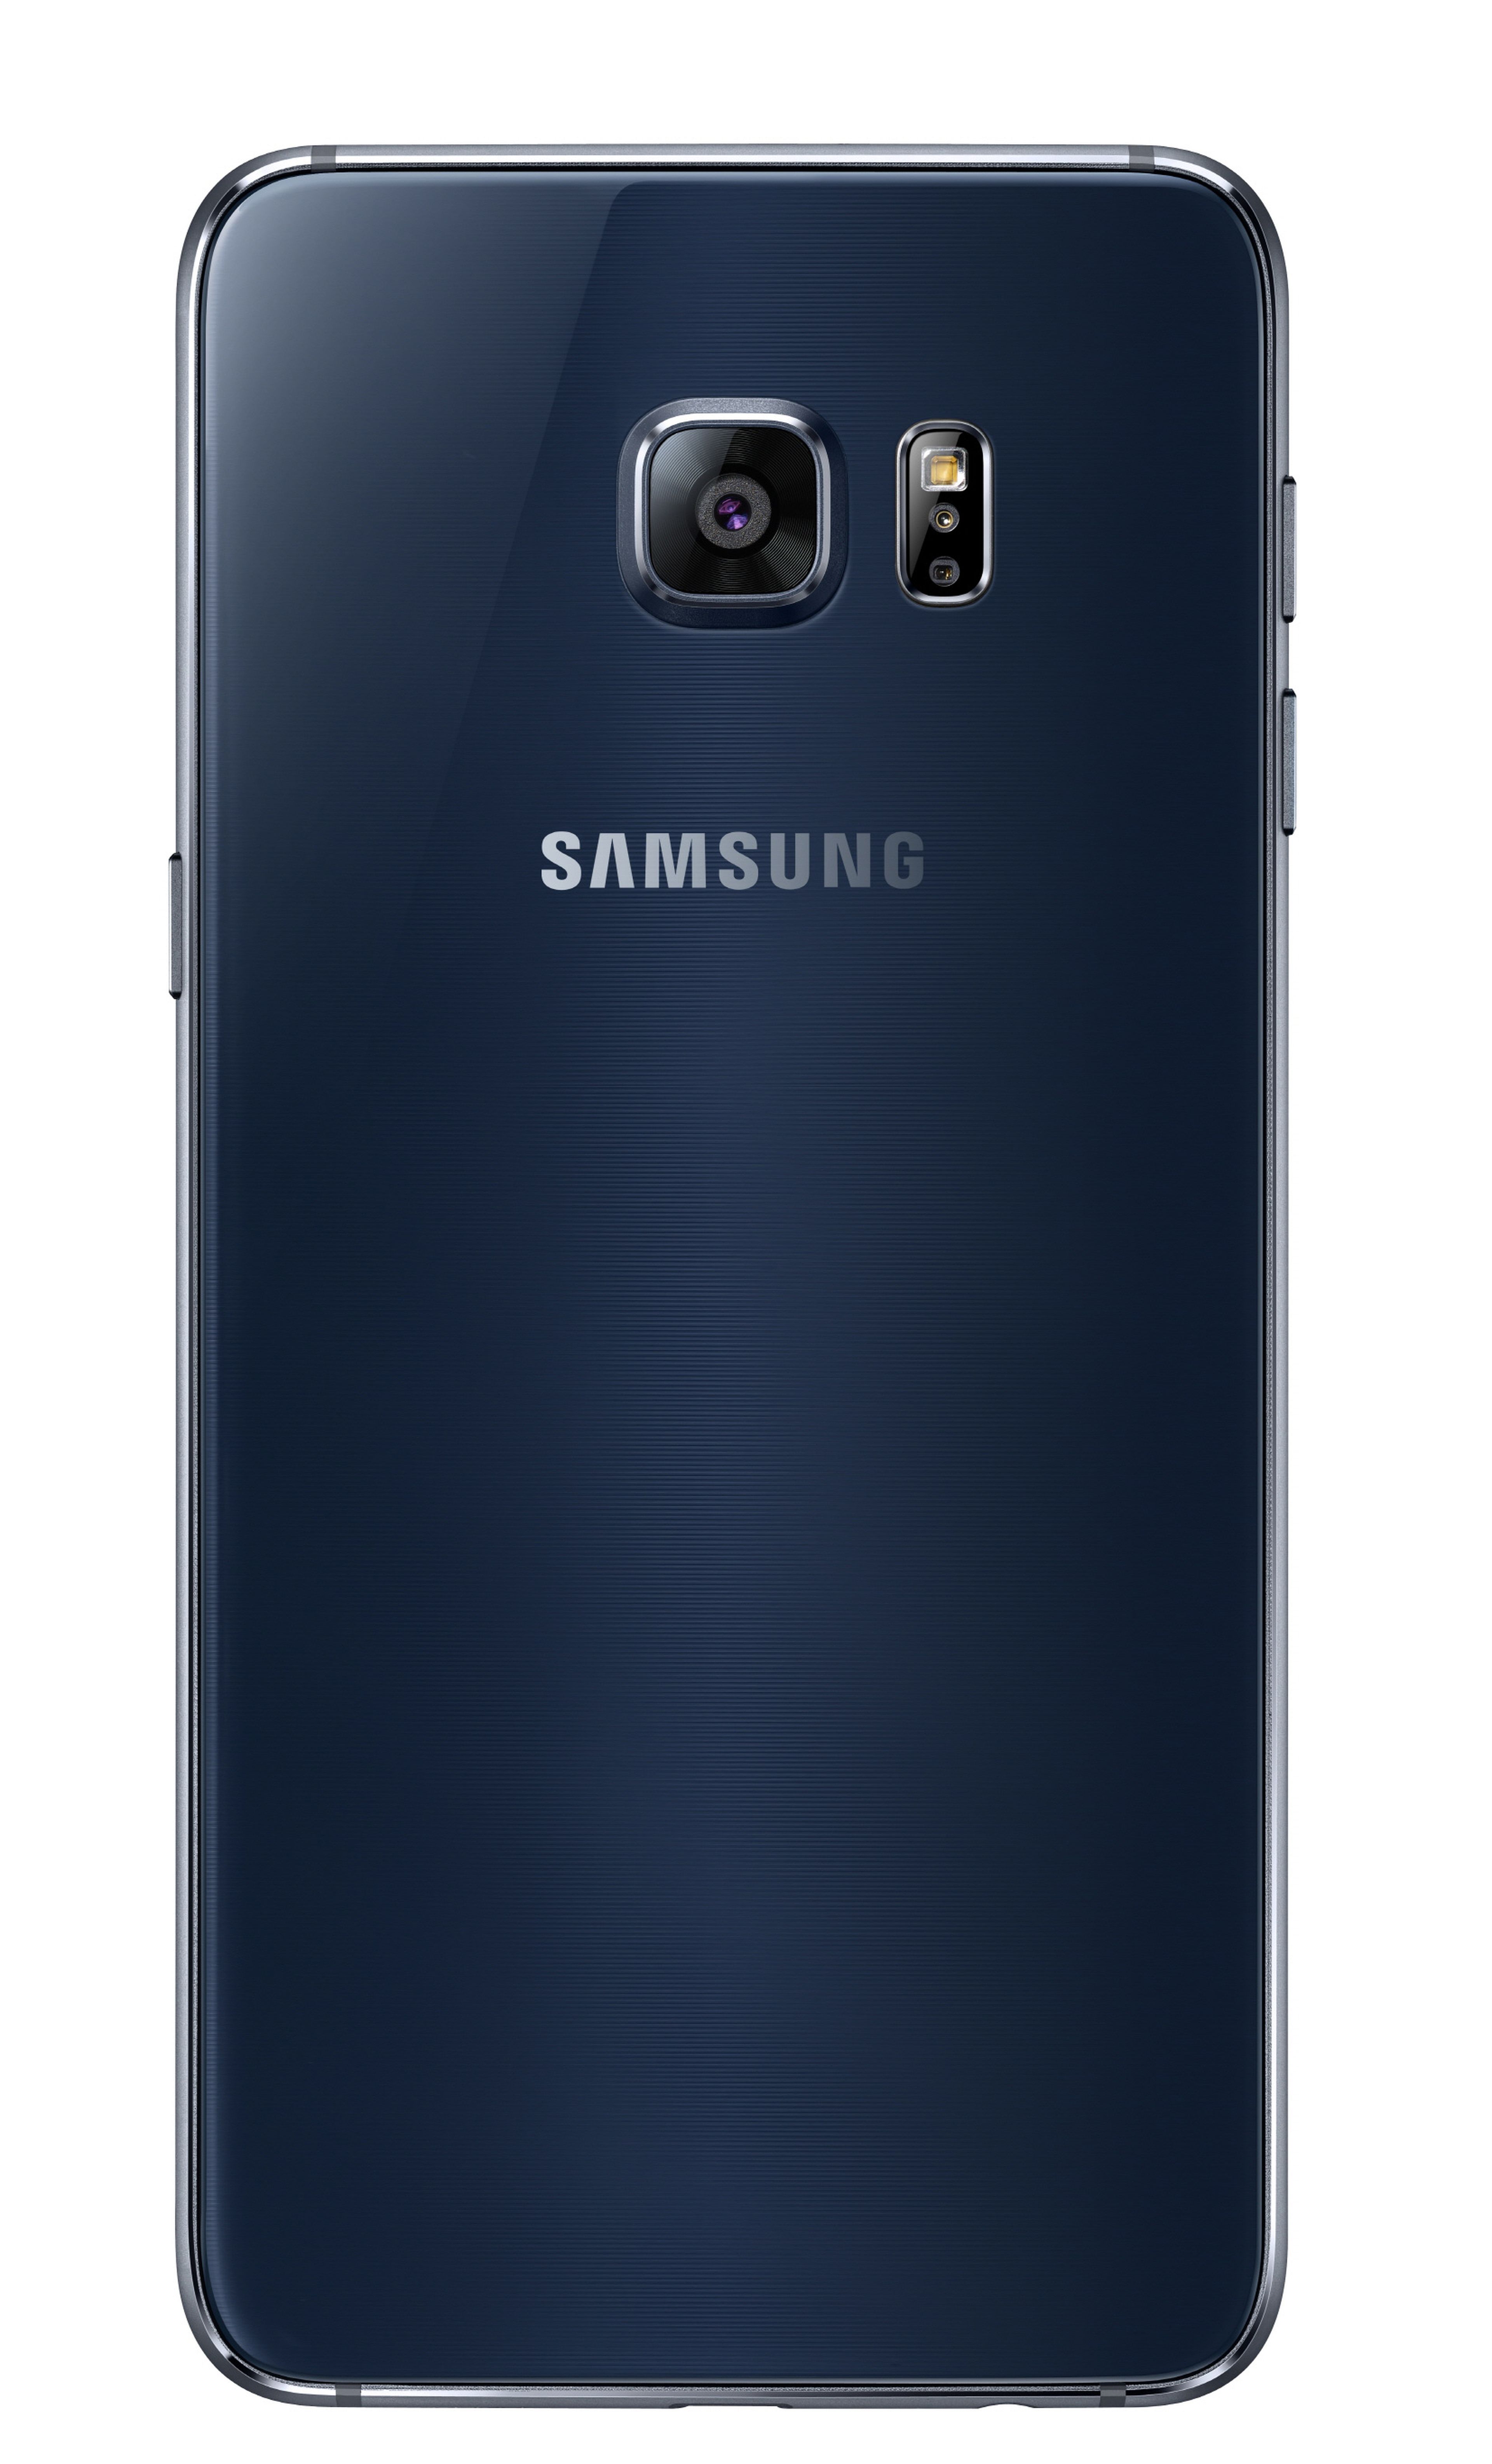 Samsung Galaxy S6 Edge+ Black Sapphire